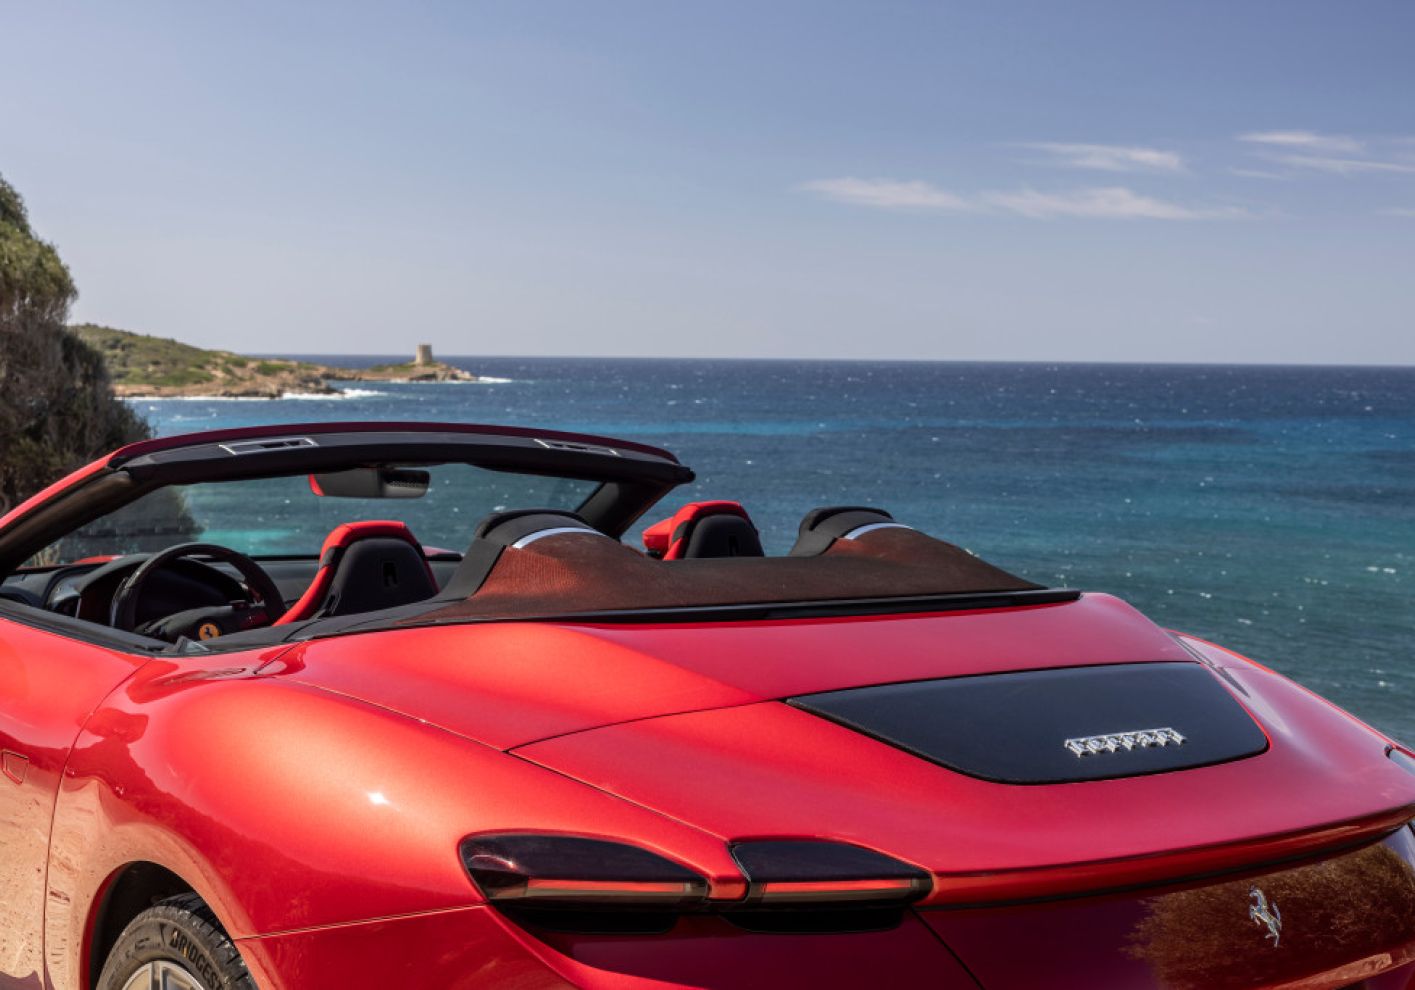 The Ferrari Roma evokes the feel of the Riviera